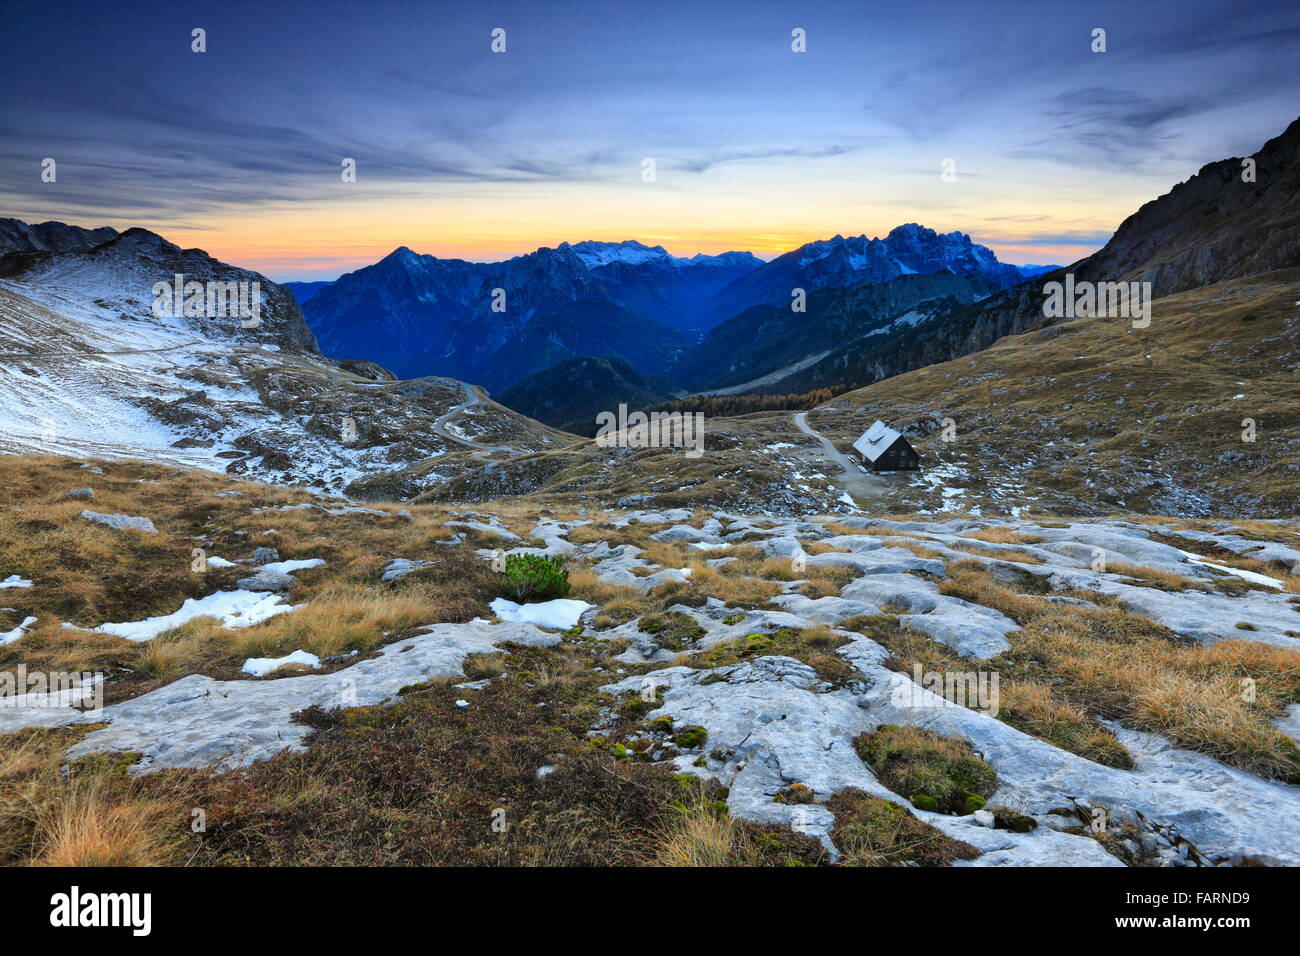 Berg Sonnenuntergang Landschaft. Mangart, Julische Alpen Slowenien und Italien. Stockfoto